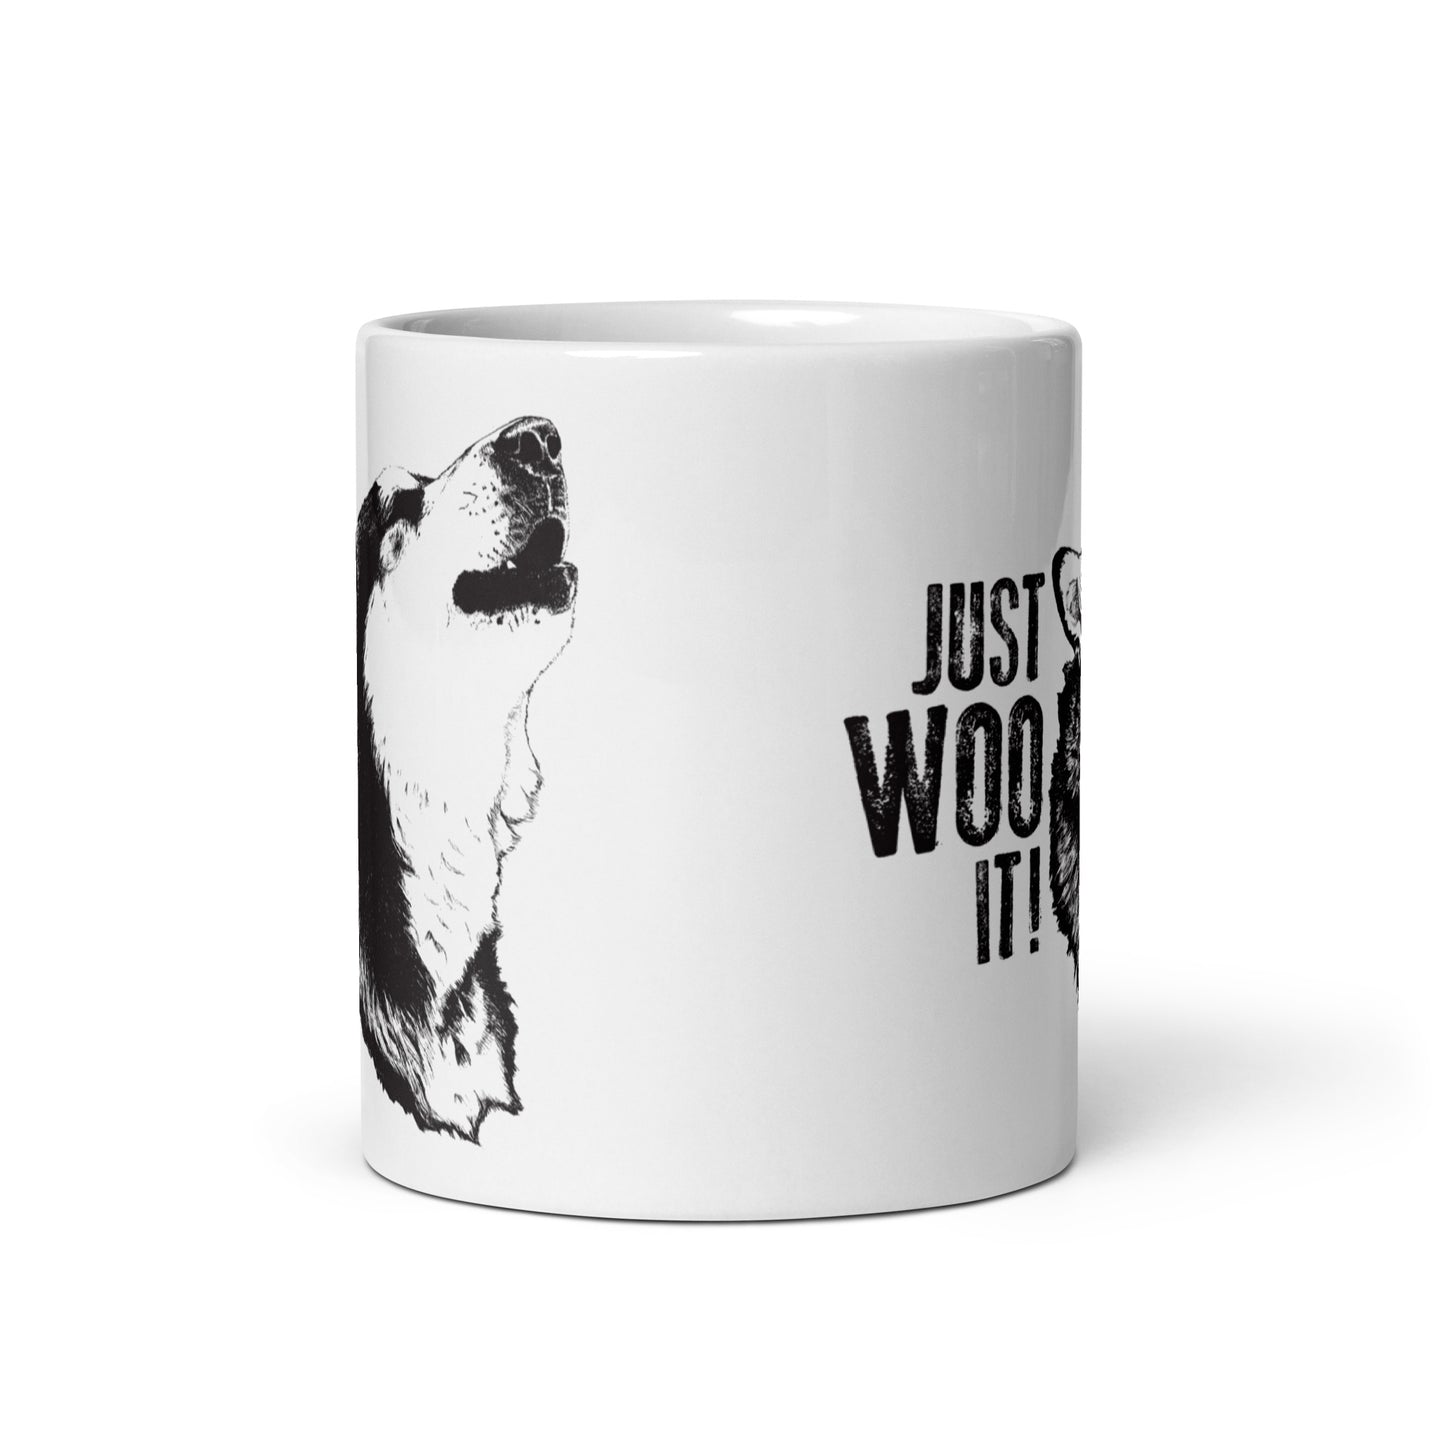 JUST WOO IT! - Alaskan Malamute - Coffee Mug